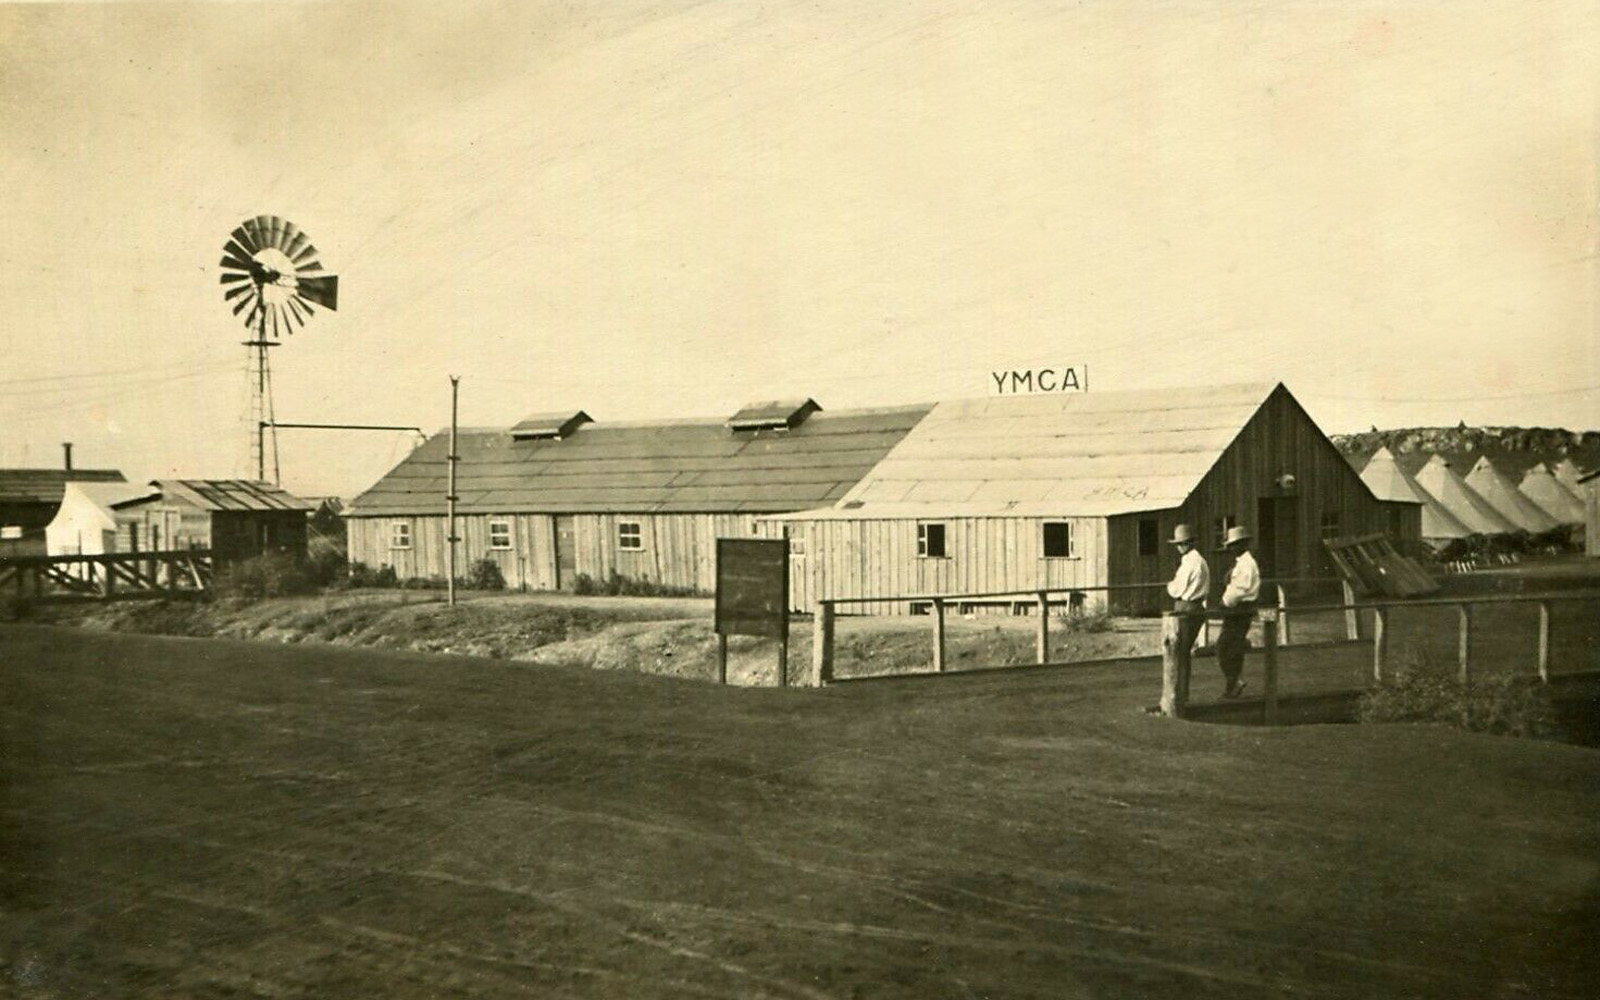 YMCA at Columbus, New Mexico